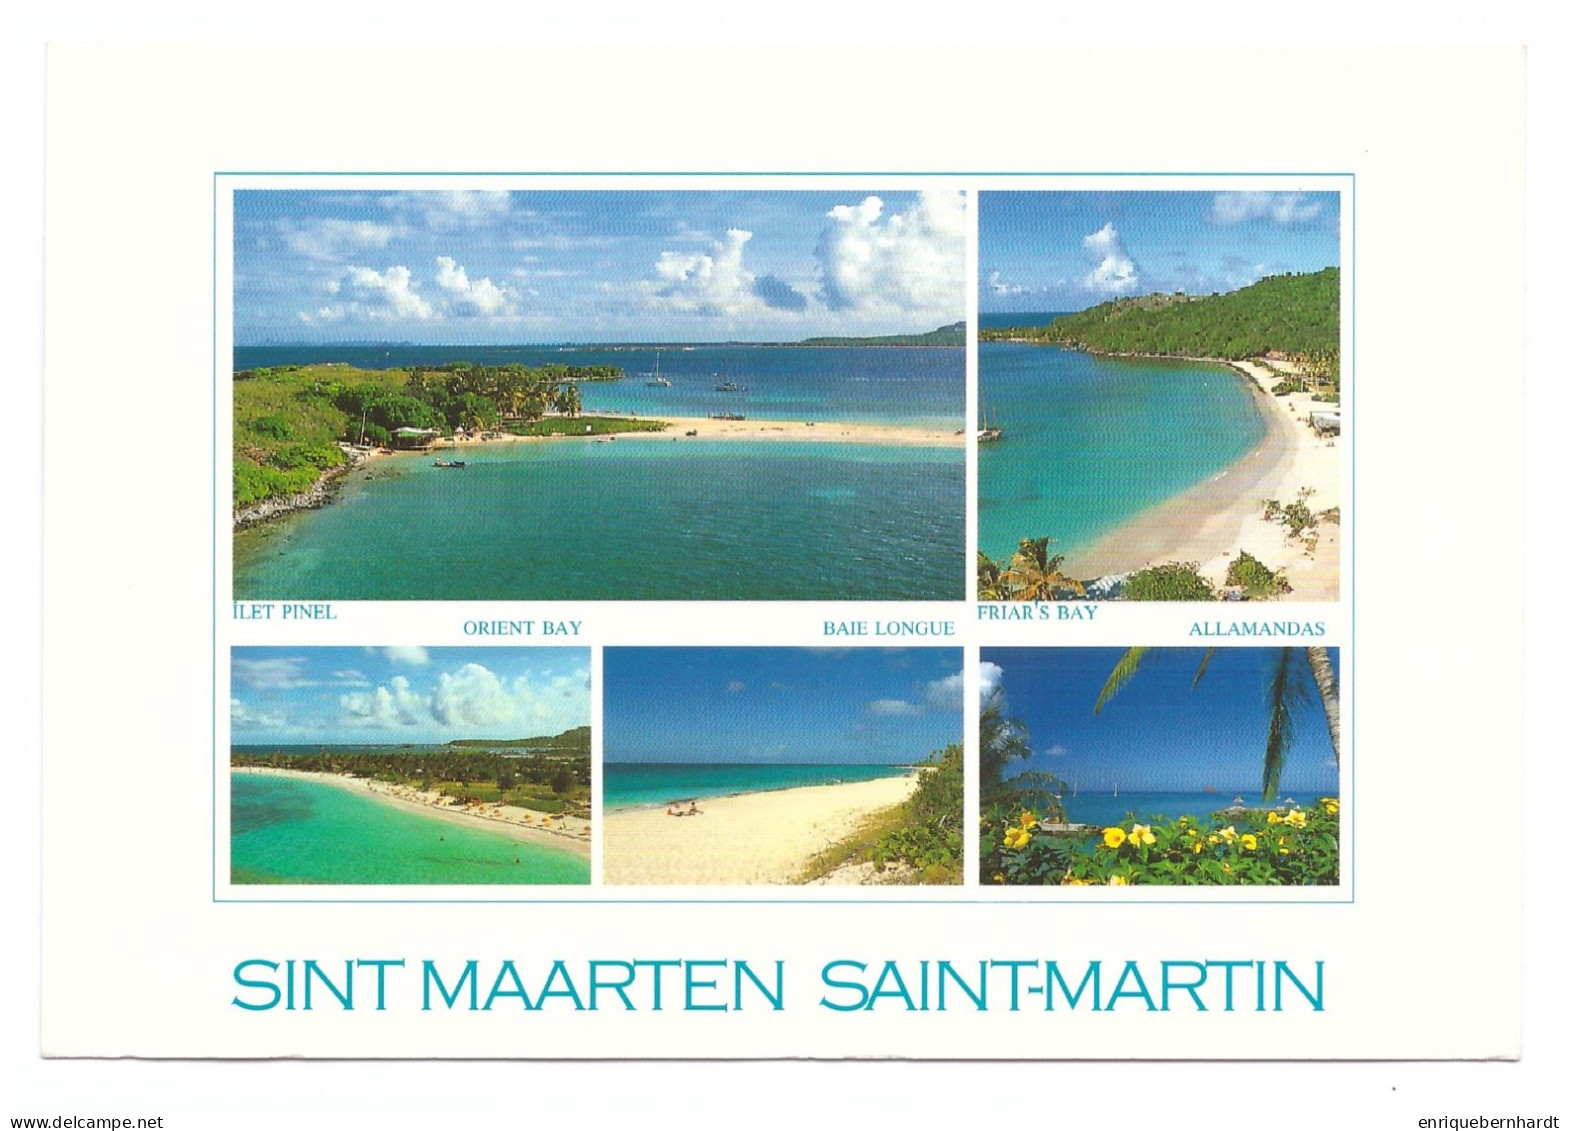 SINT MAARTEN / SAINT-MARTIN (PAÍSES BAJOS / FRANCIA) • THE FRIENDLY ISLAND - Saint-Martin